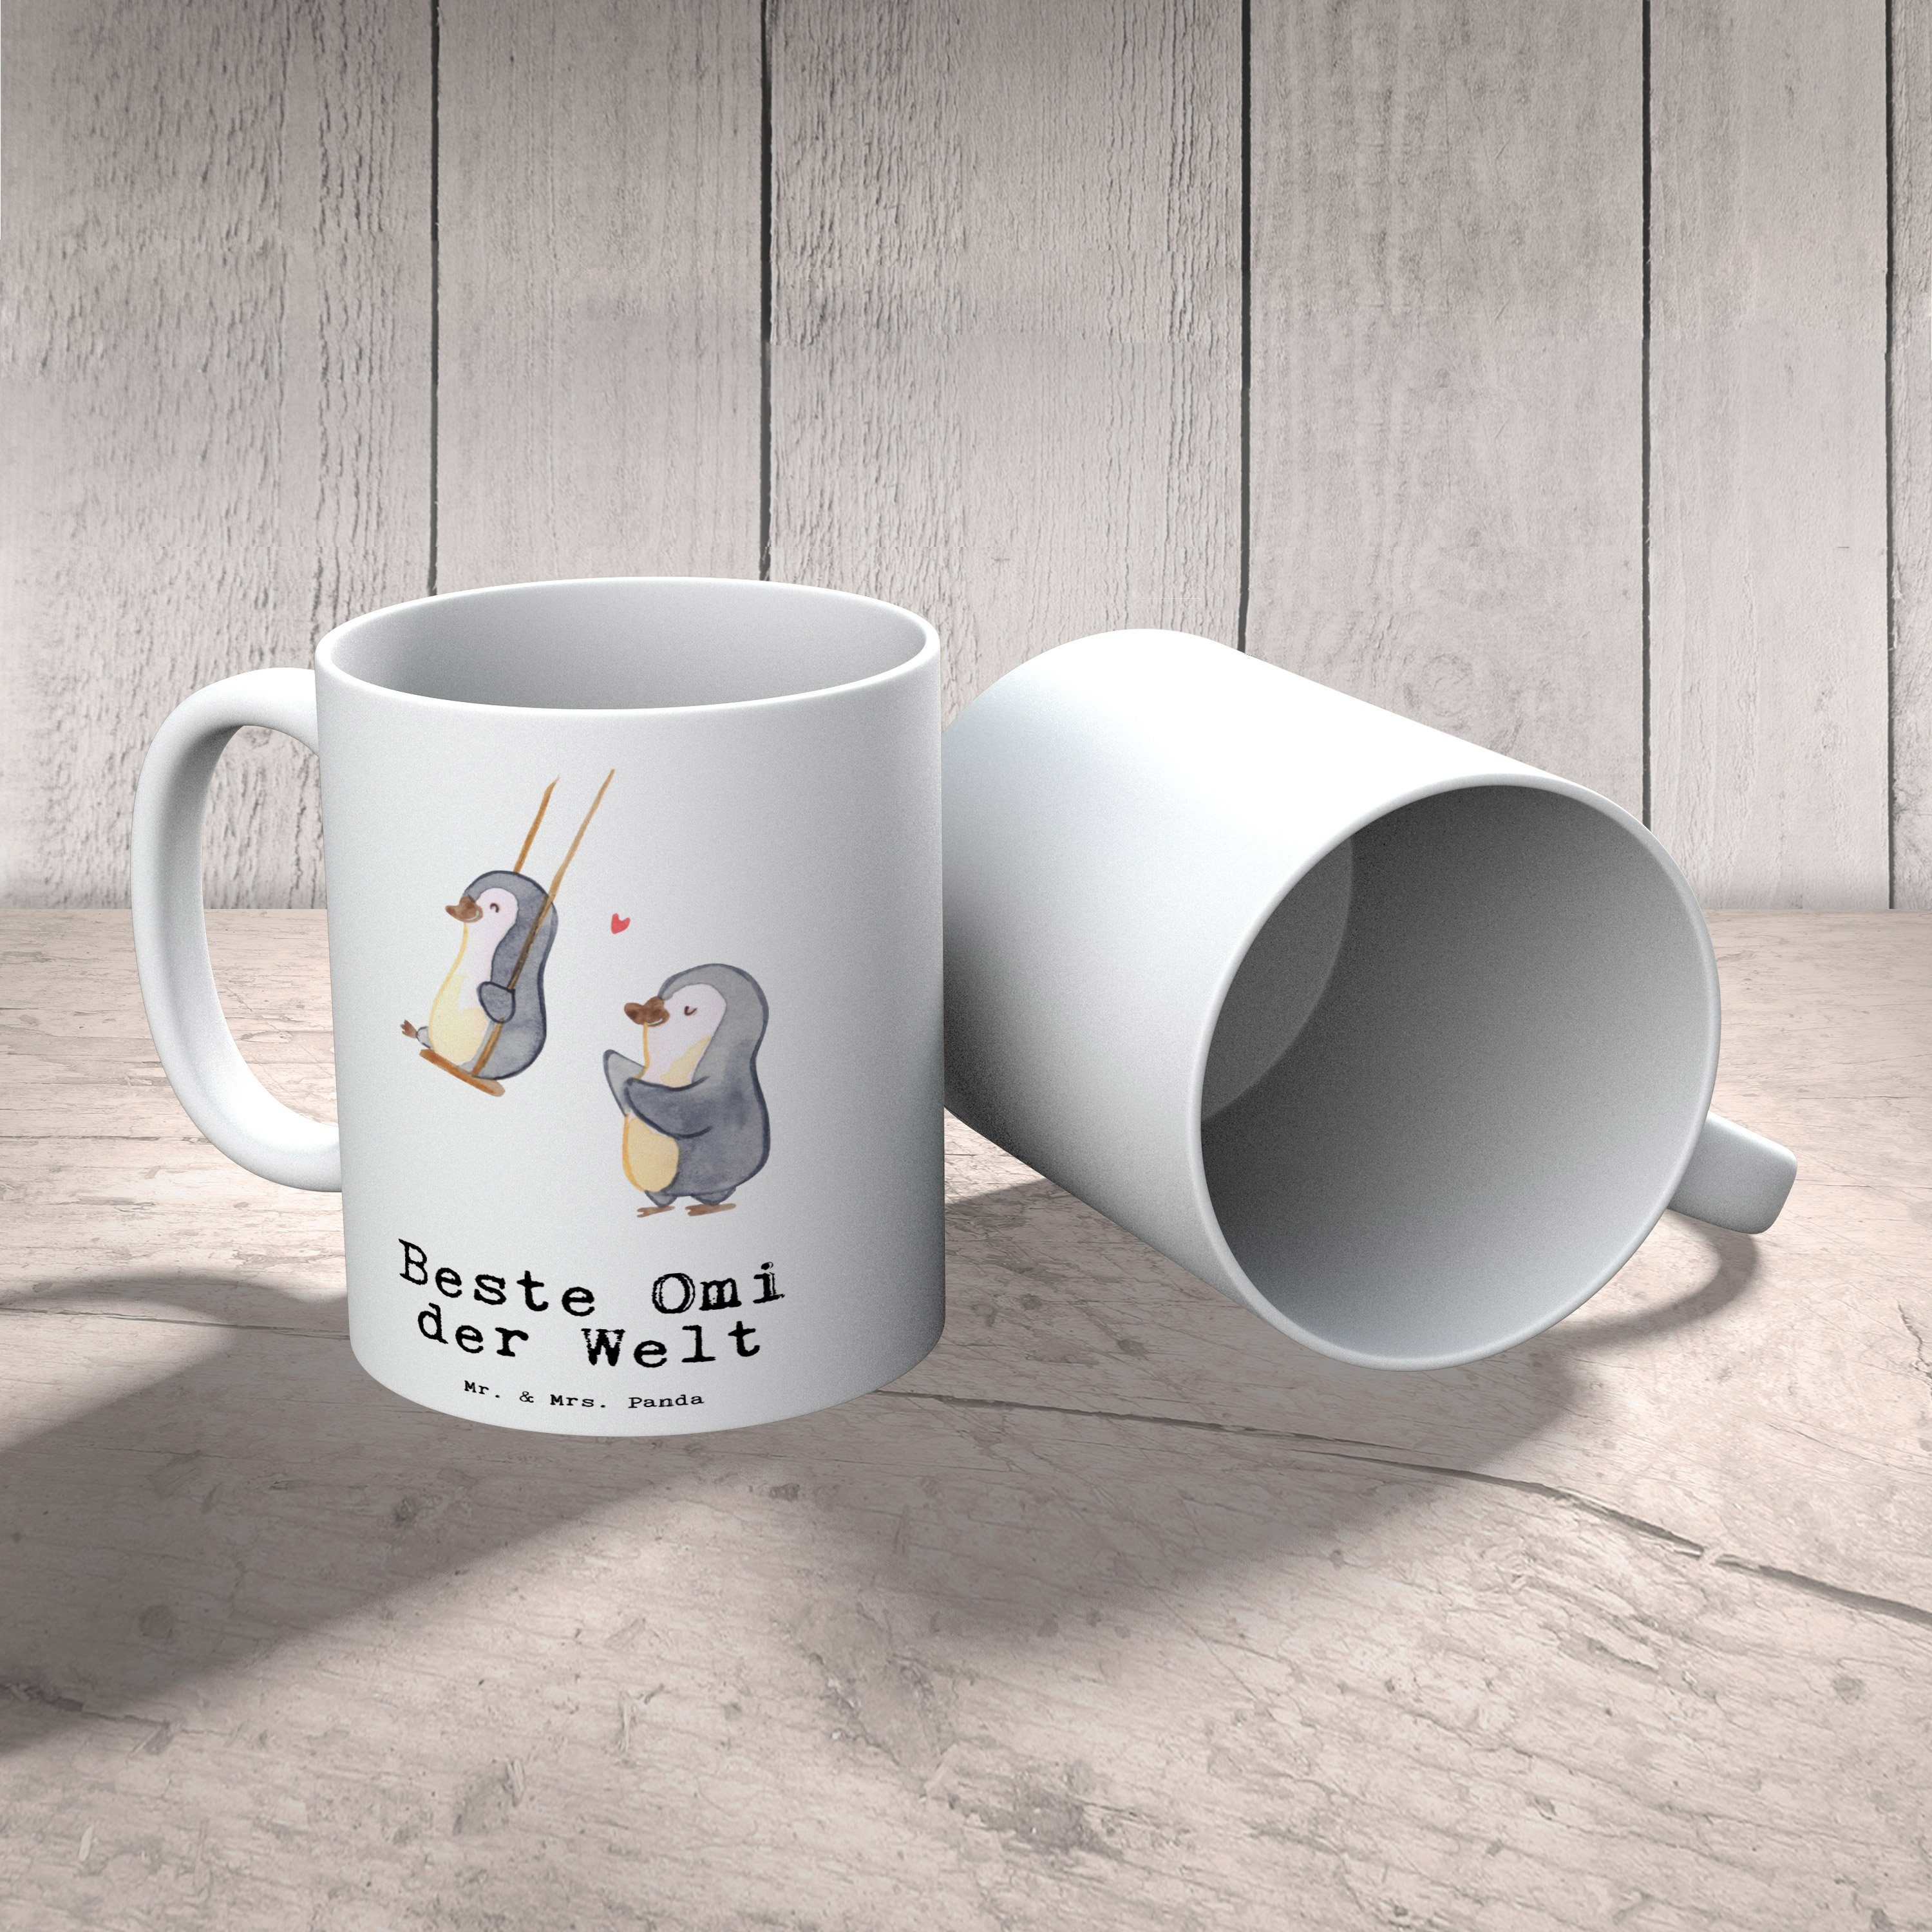 Mr. & Büro, machen, - Keramik Weiß Pinguin Tasse Geschenk, der Panda Welt Mitbringsel, Mrs. Danke, Geschenktipp, Geburtstagsgeschenk, - Beste Omi Kaffeetasse, Freude Ommi, Enkelin